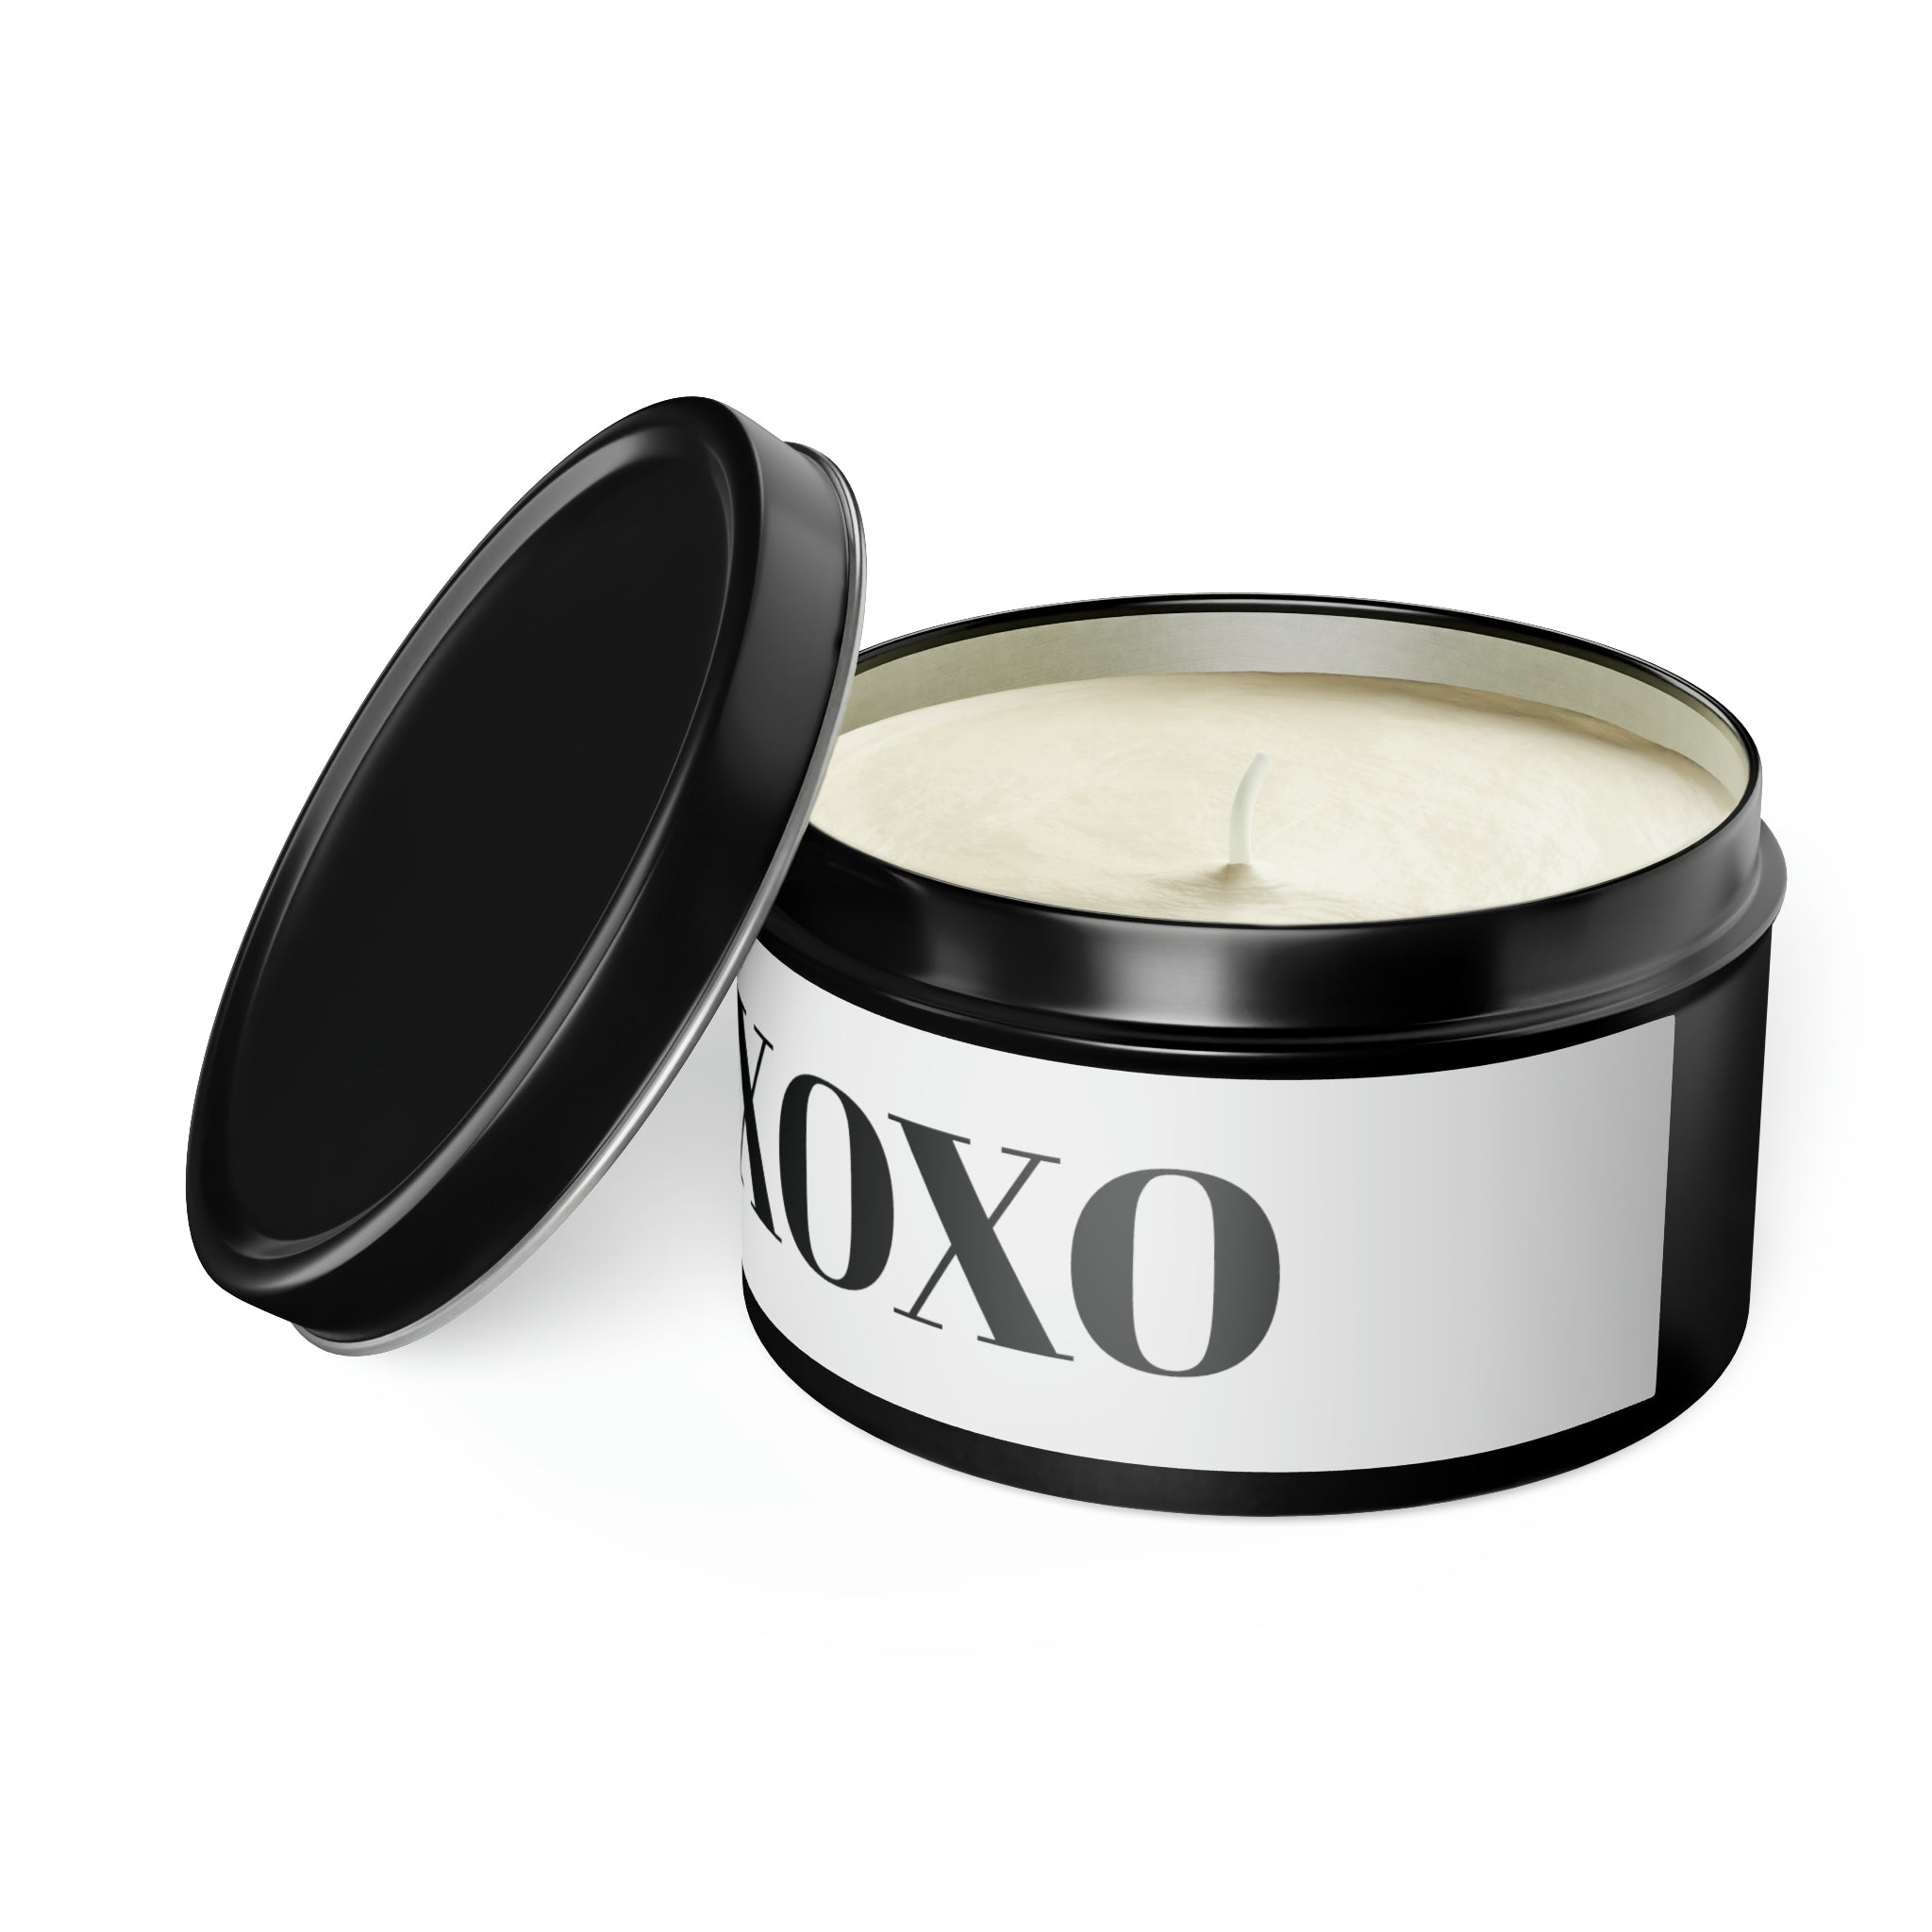 XOXO Tin Candle